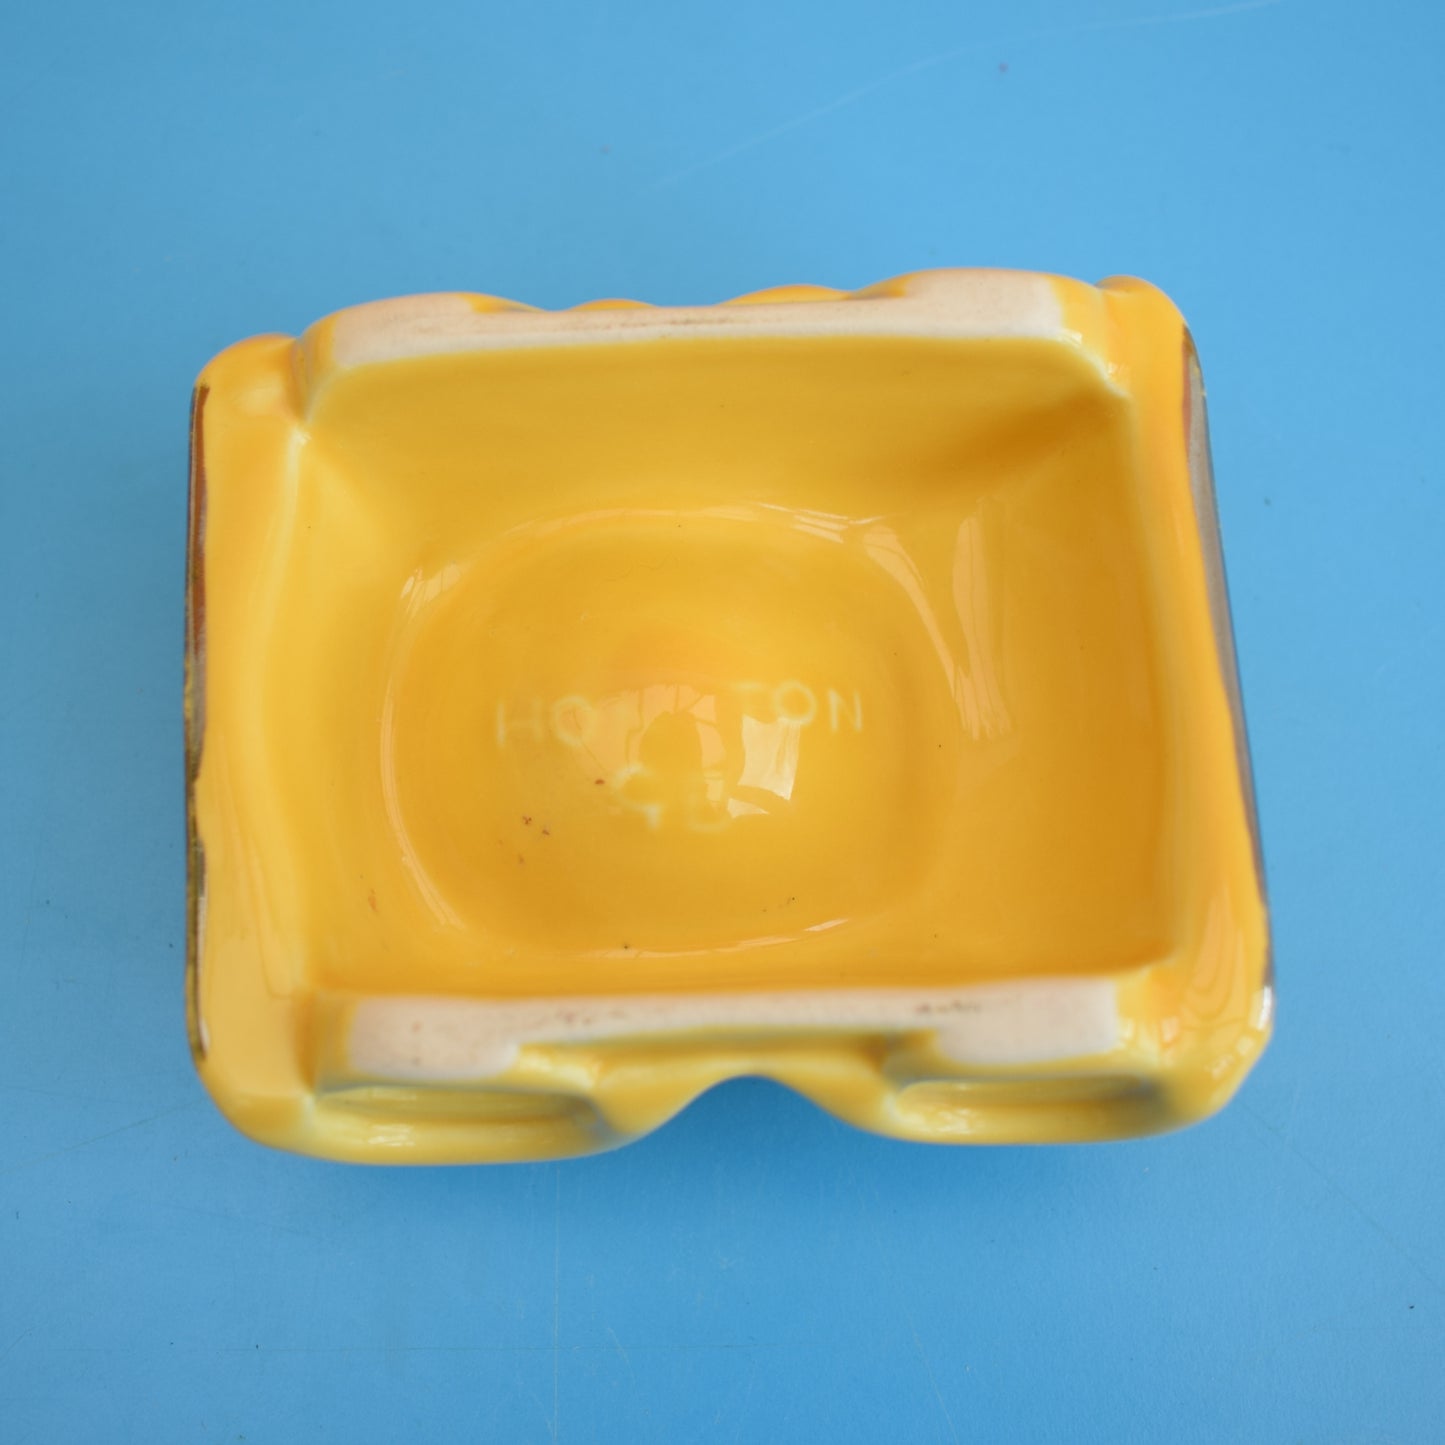 Vintage 1960s Ceramic Car Egg Cup - Honiton - Yellow